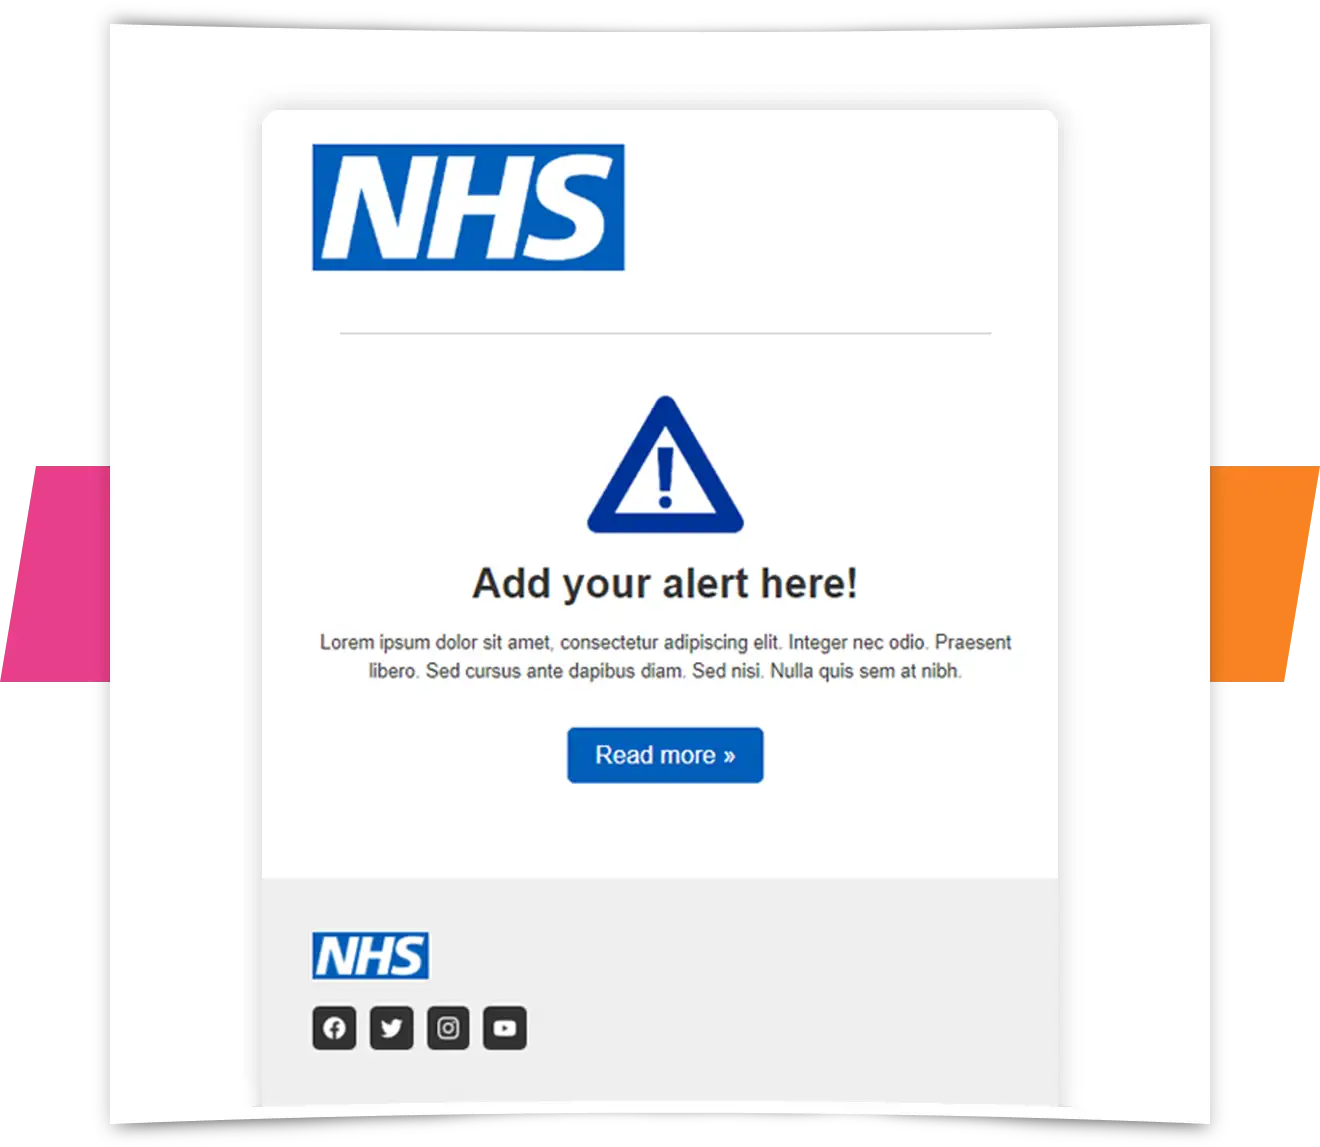 NHS alert email example